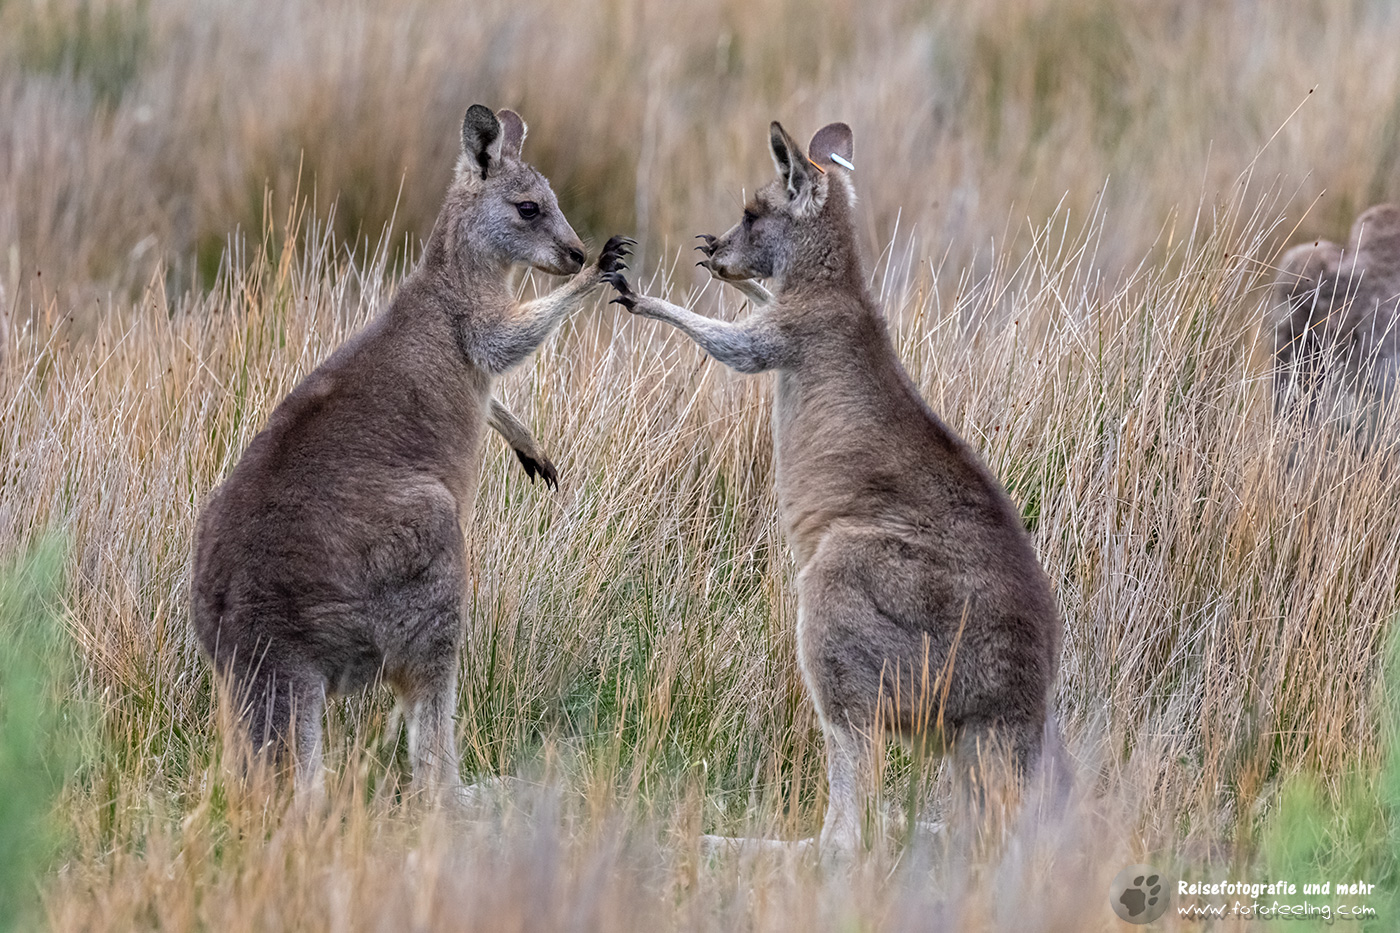 Kämpfende Graue Riesenkängurus, Wilsons Promontory National Park, Victoria, Australien